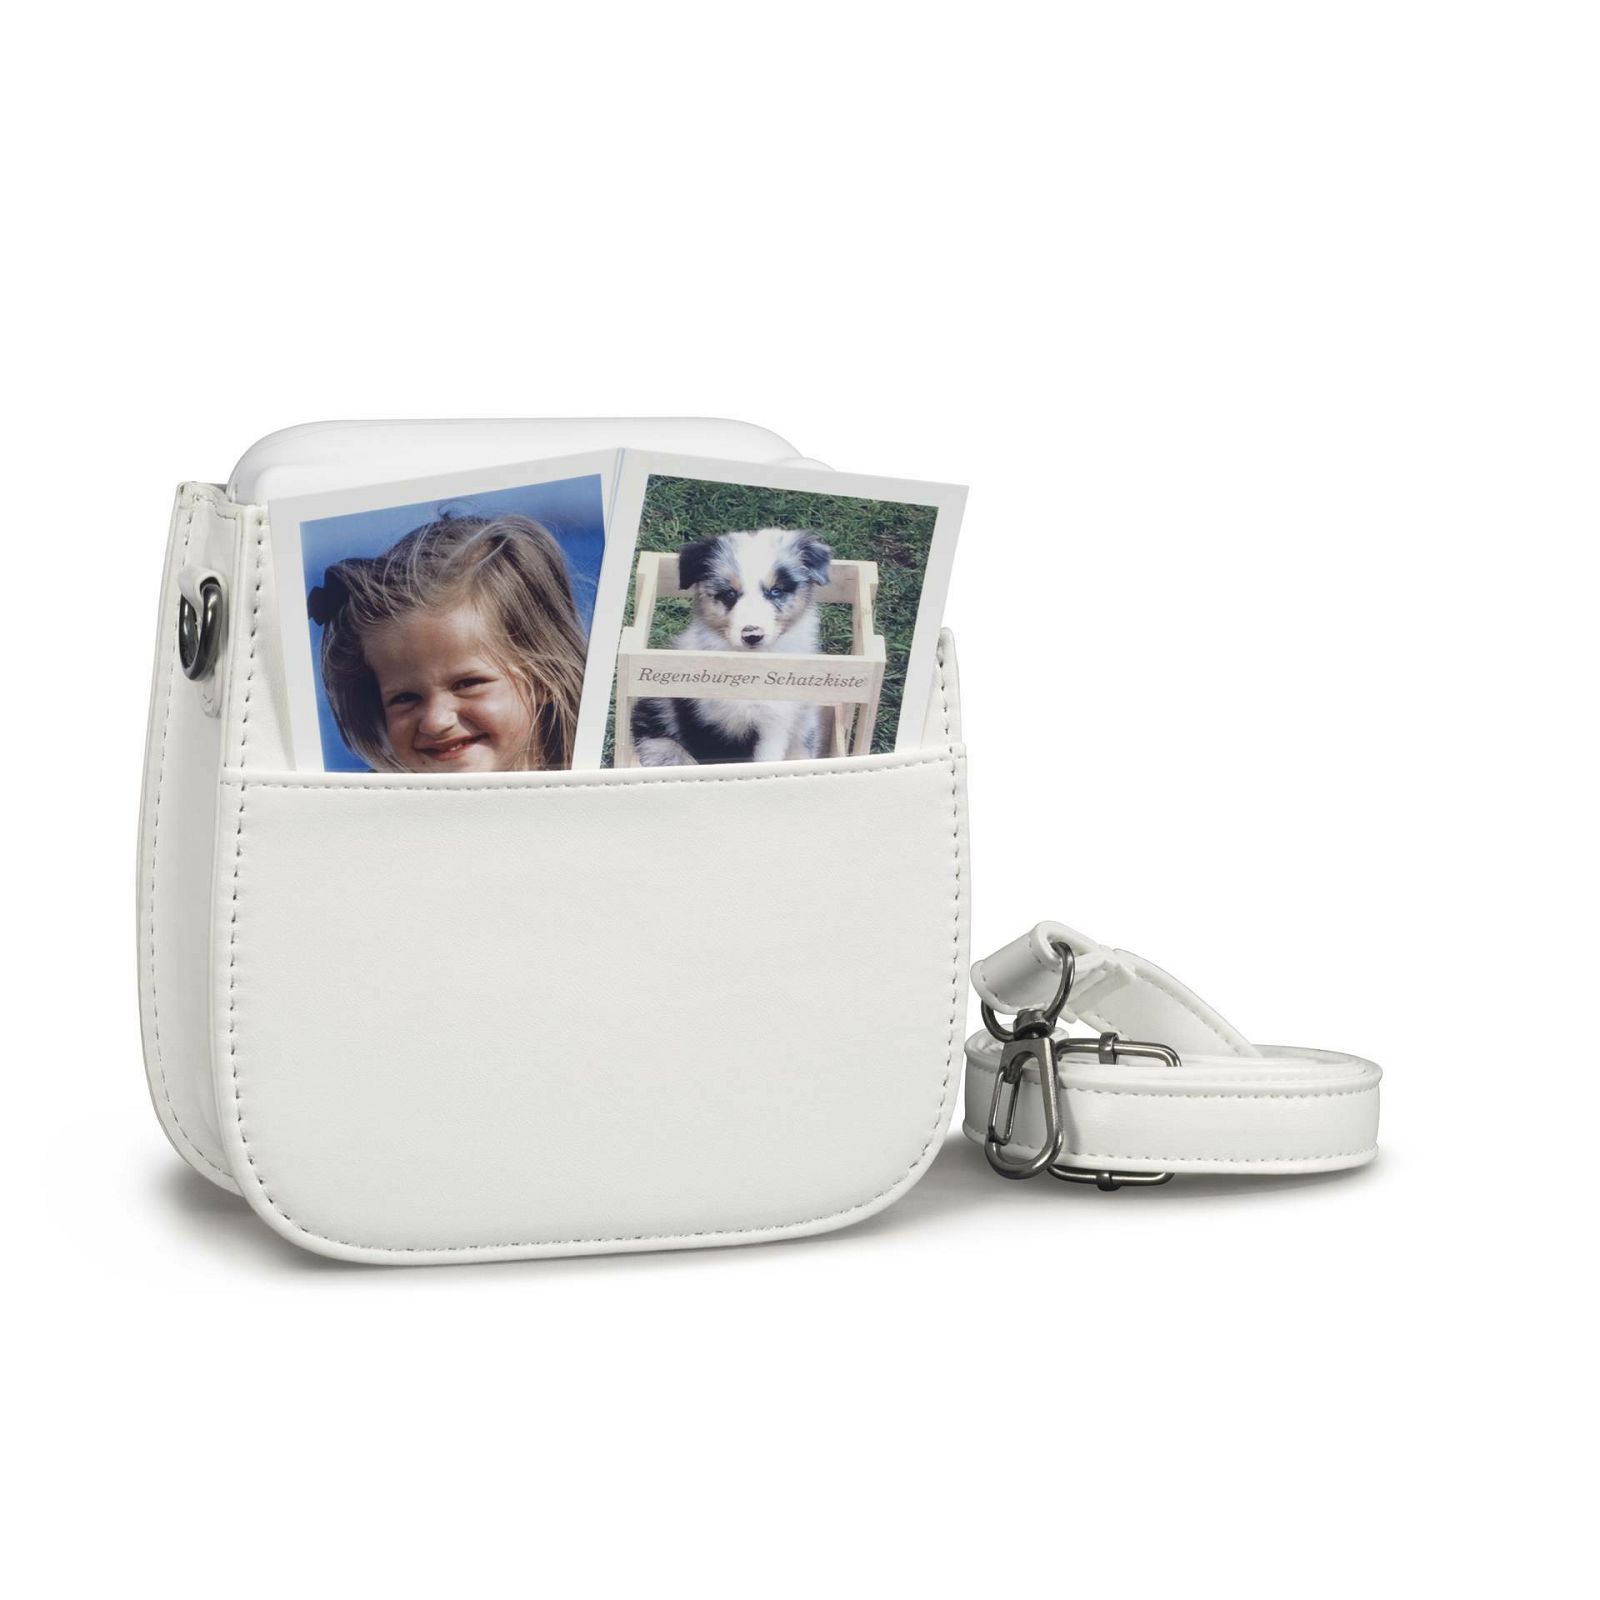 Cullmann Rio Fit 110 White bijela torbica futrola za Fujifilm Fuji Instax Mini 11 fotoaparat (98861)